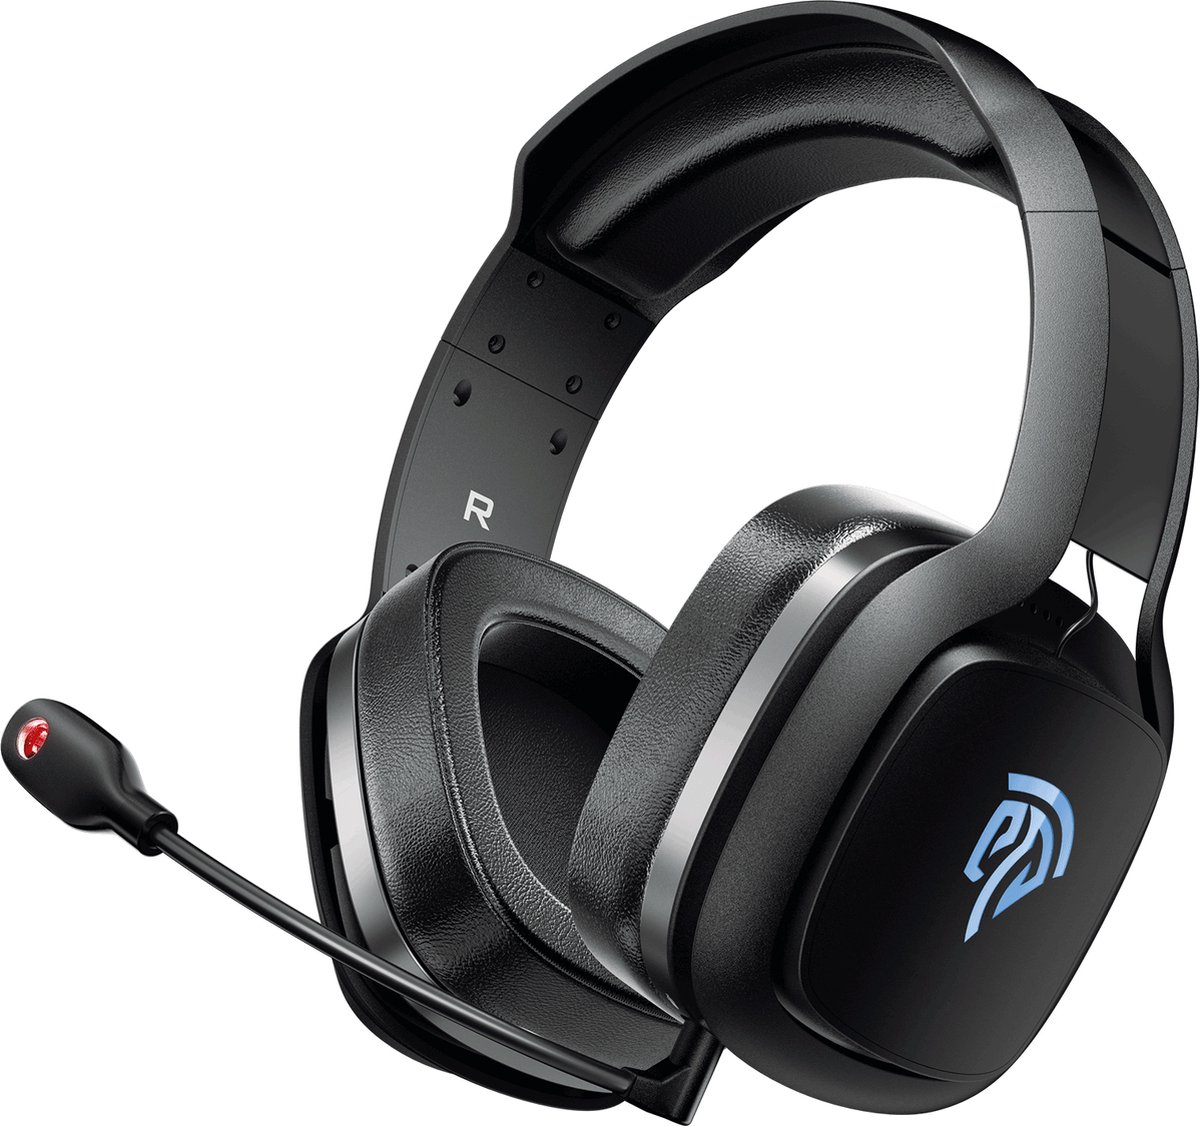 Draadloze Gaming Headset met Omnidirectional Noise Canceling Microfoon voor PS5, PS4, Nintendo Switch, PC